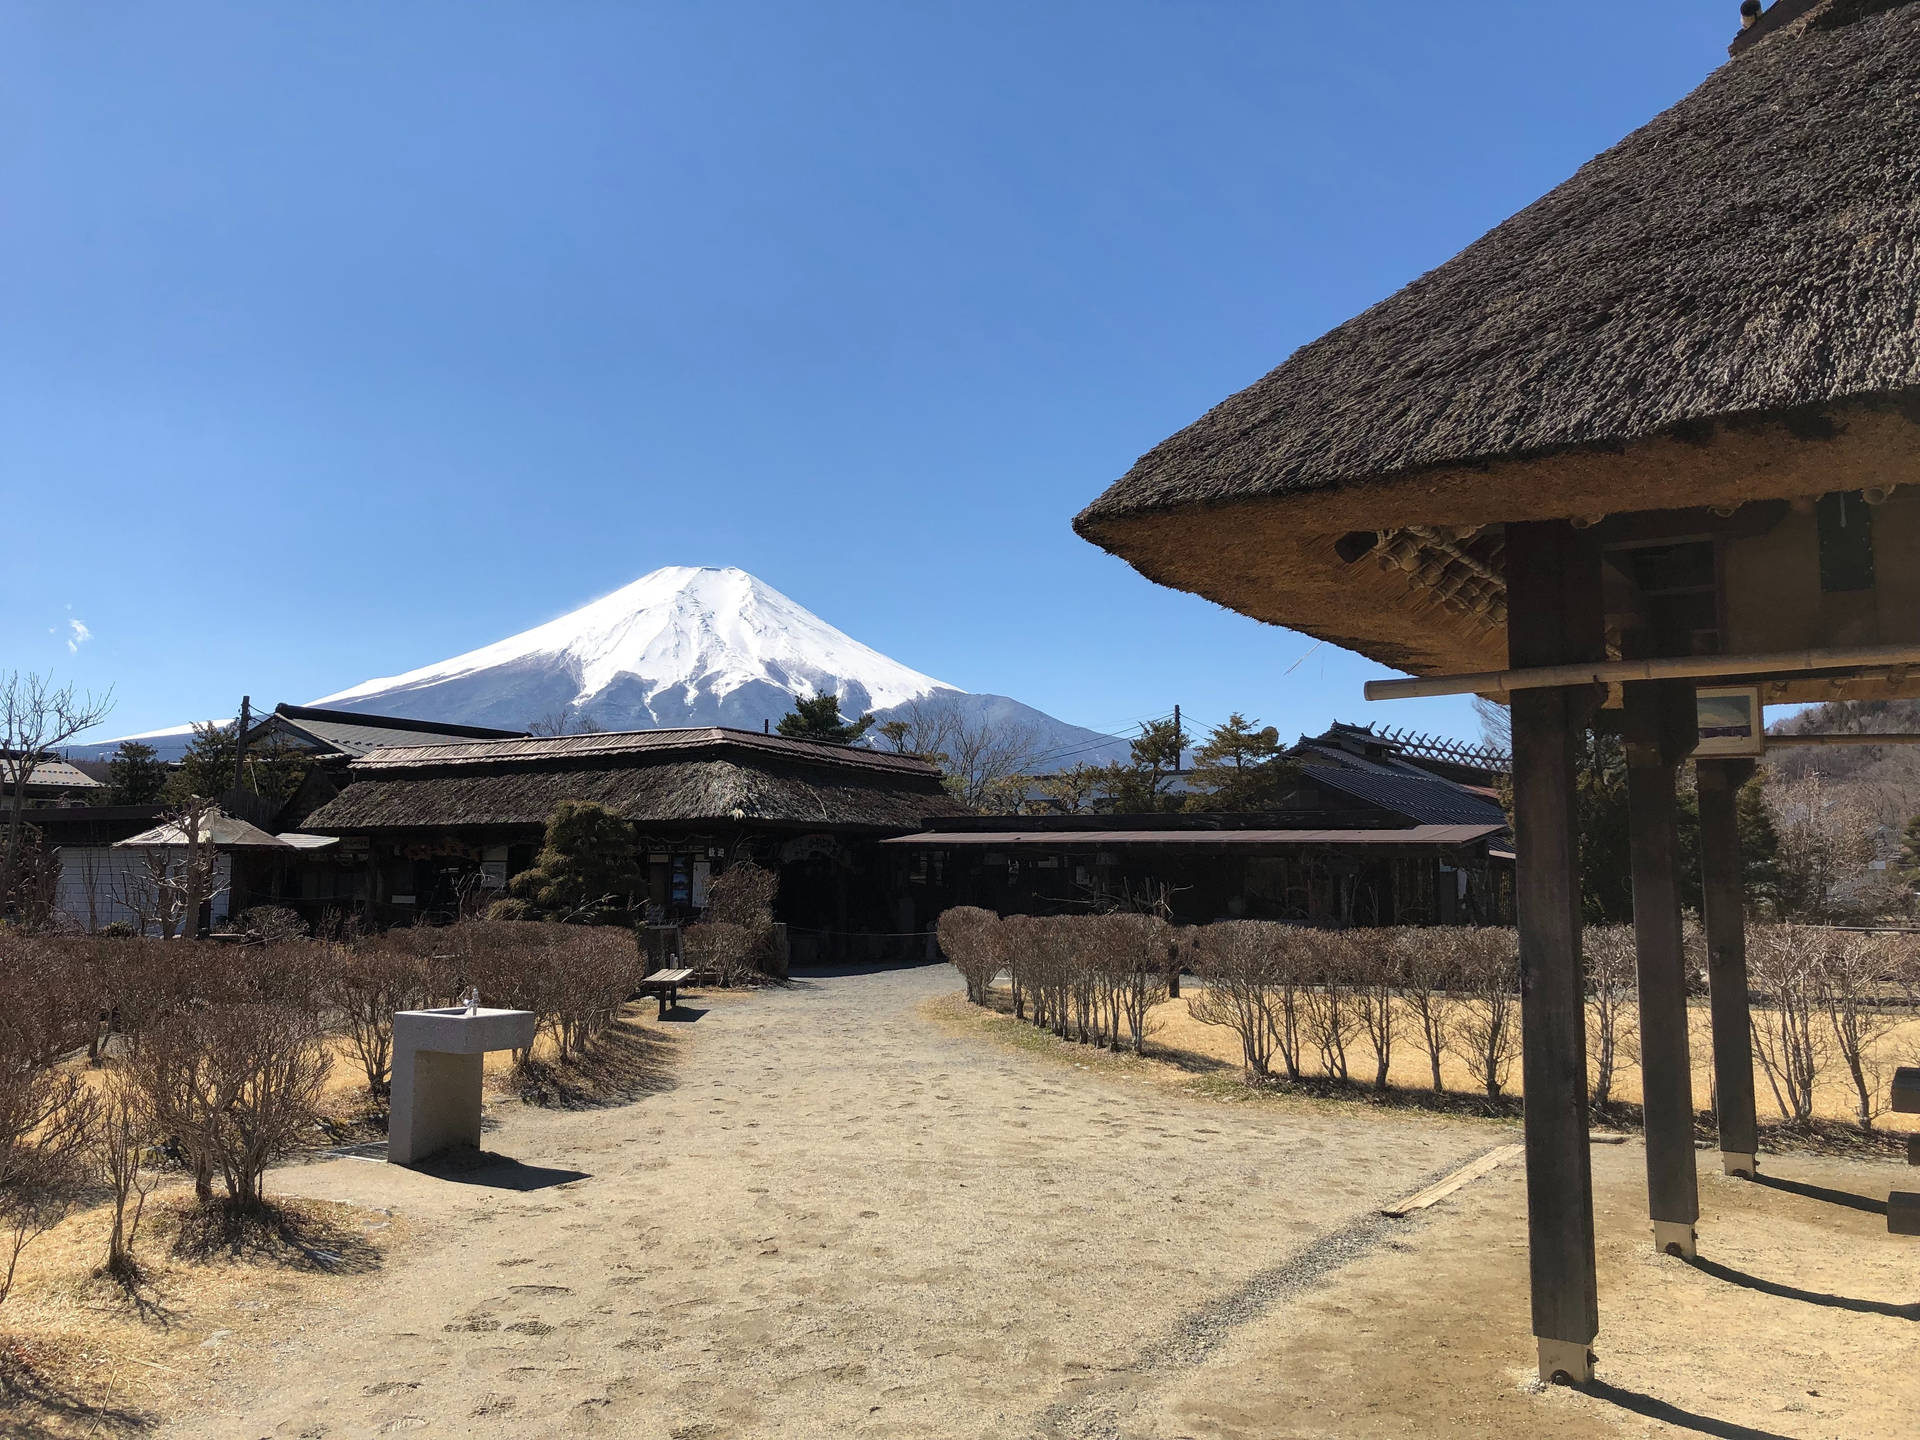 Native Huts And Mount Fuji Background